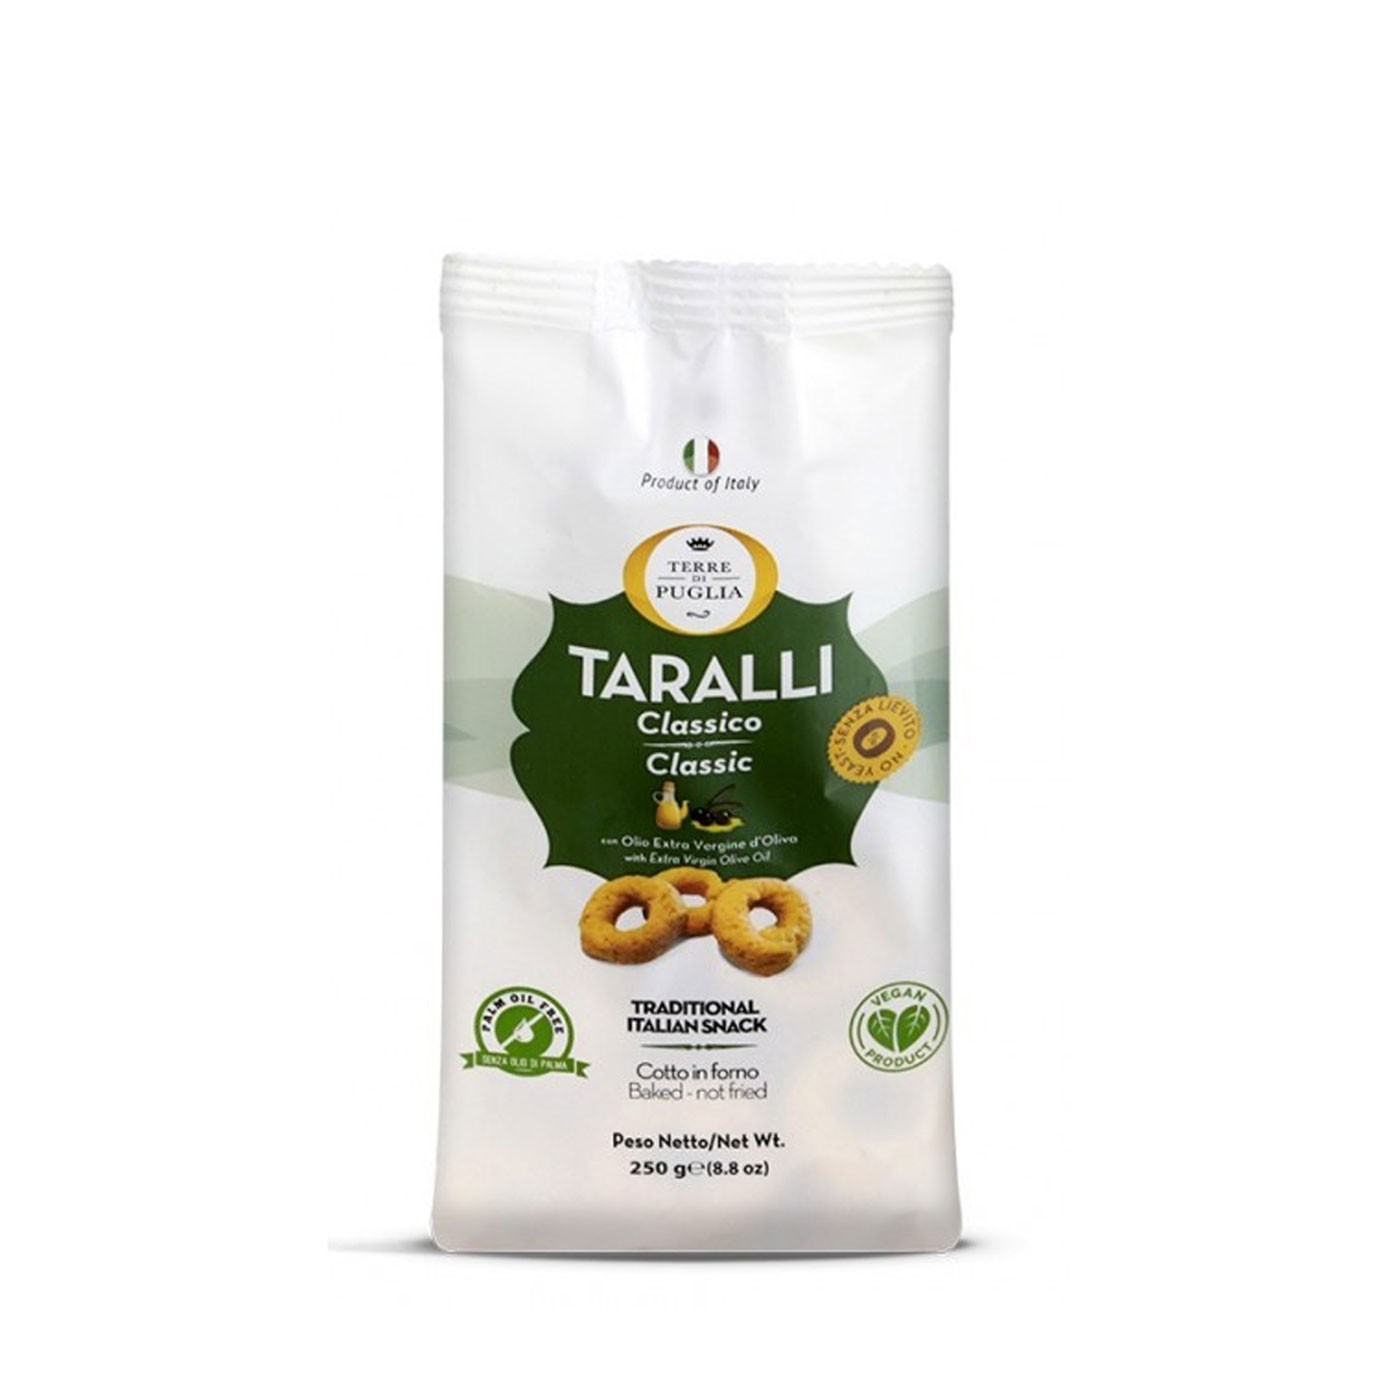 Classic Tarallini Crackers 8.1 oz - Terre di Puglia | Eataly.com